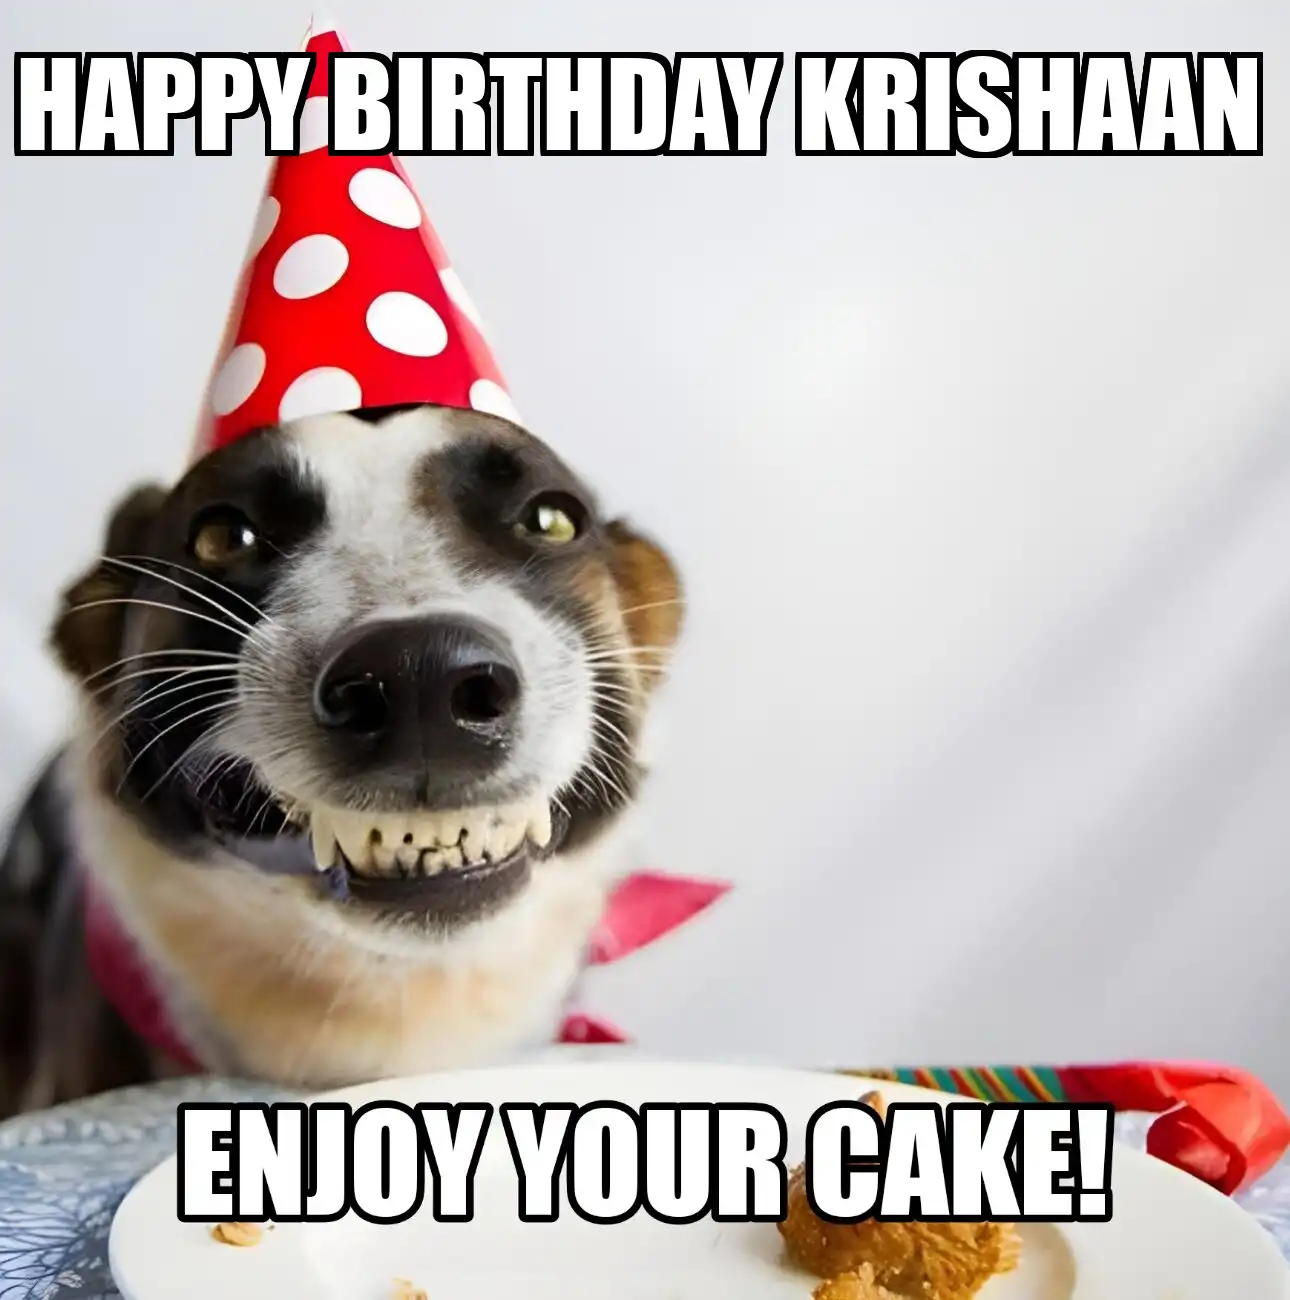 Happy Birthday Krishaan Enjoy Your Cake Dog Meme